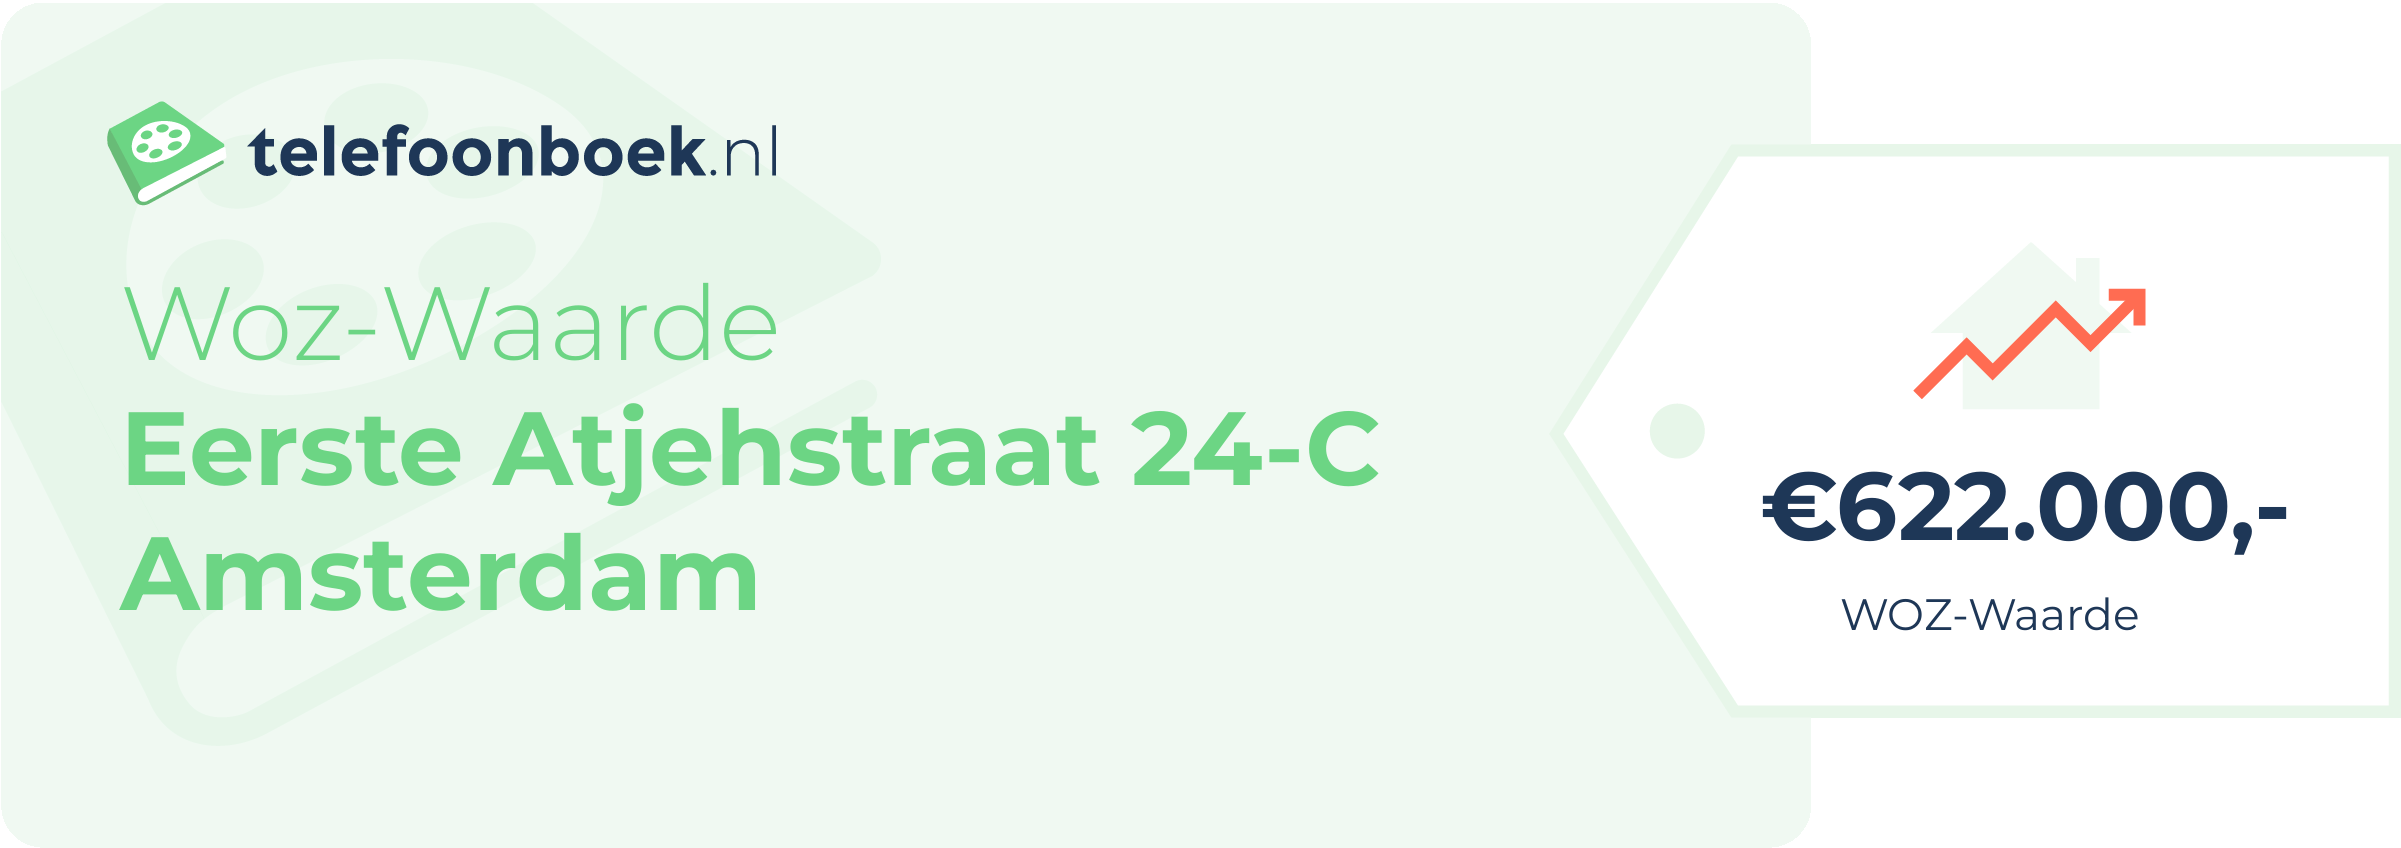 WOZ-waarde Eerste Atjehstraat 24-C Amsterdam